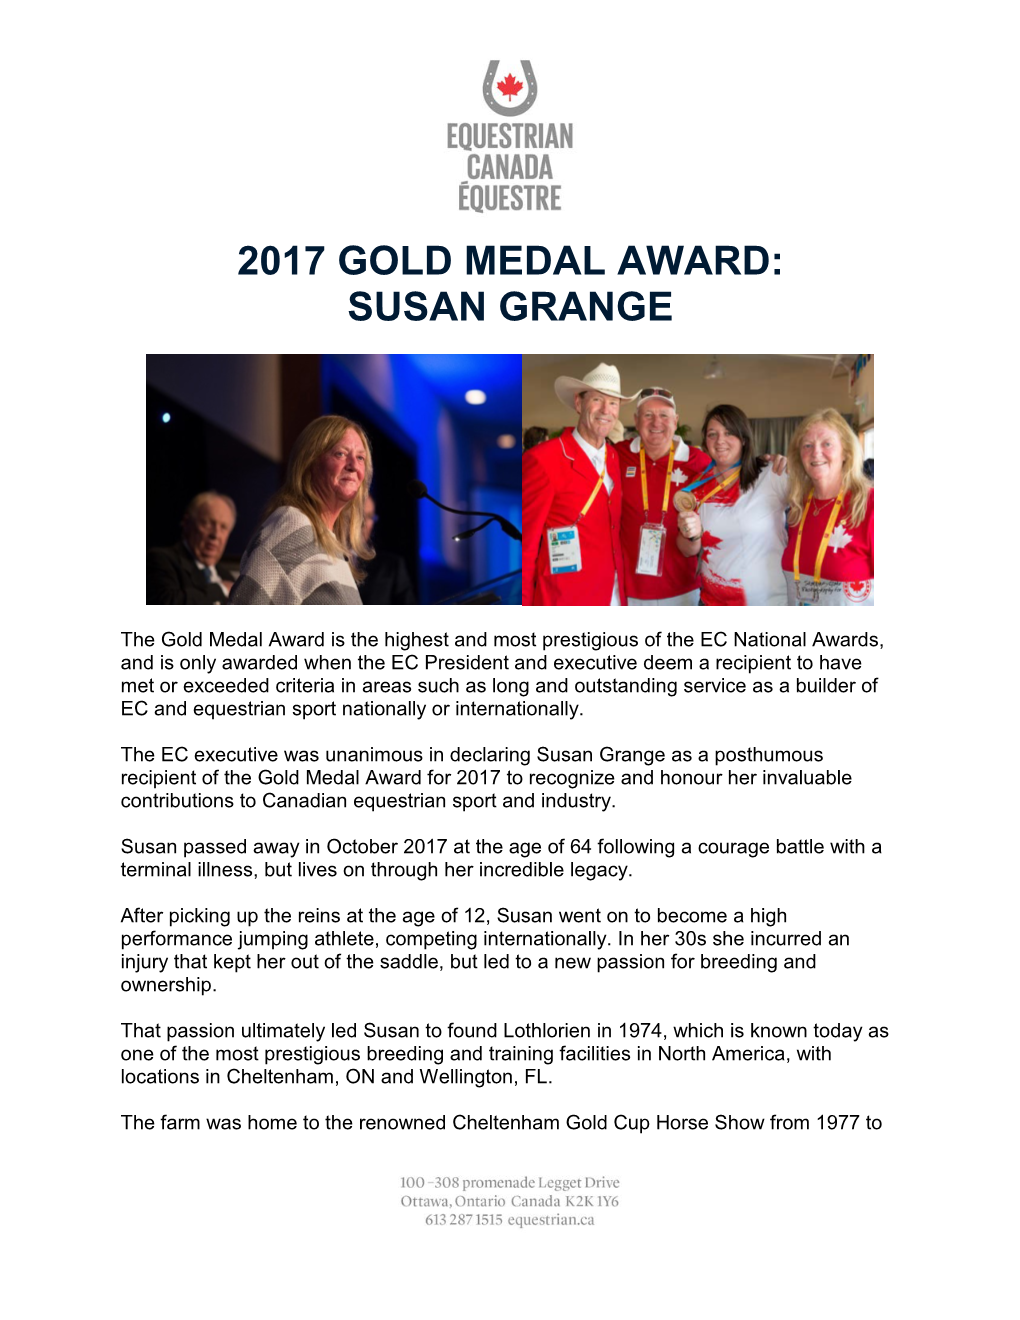 2017 Gold Medal Award: Susan Grange